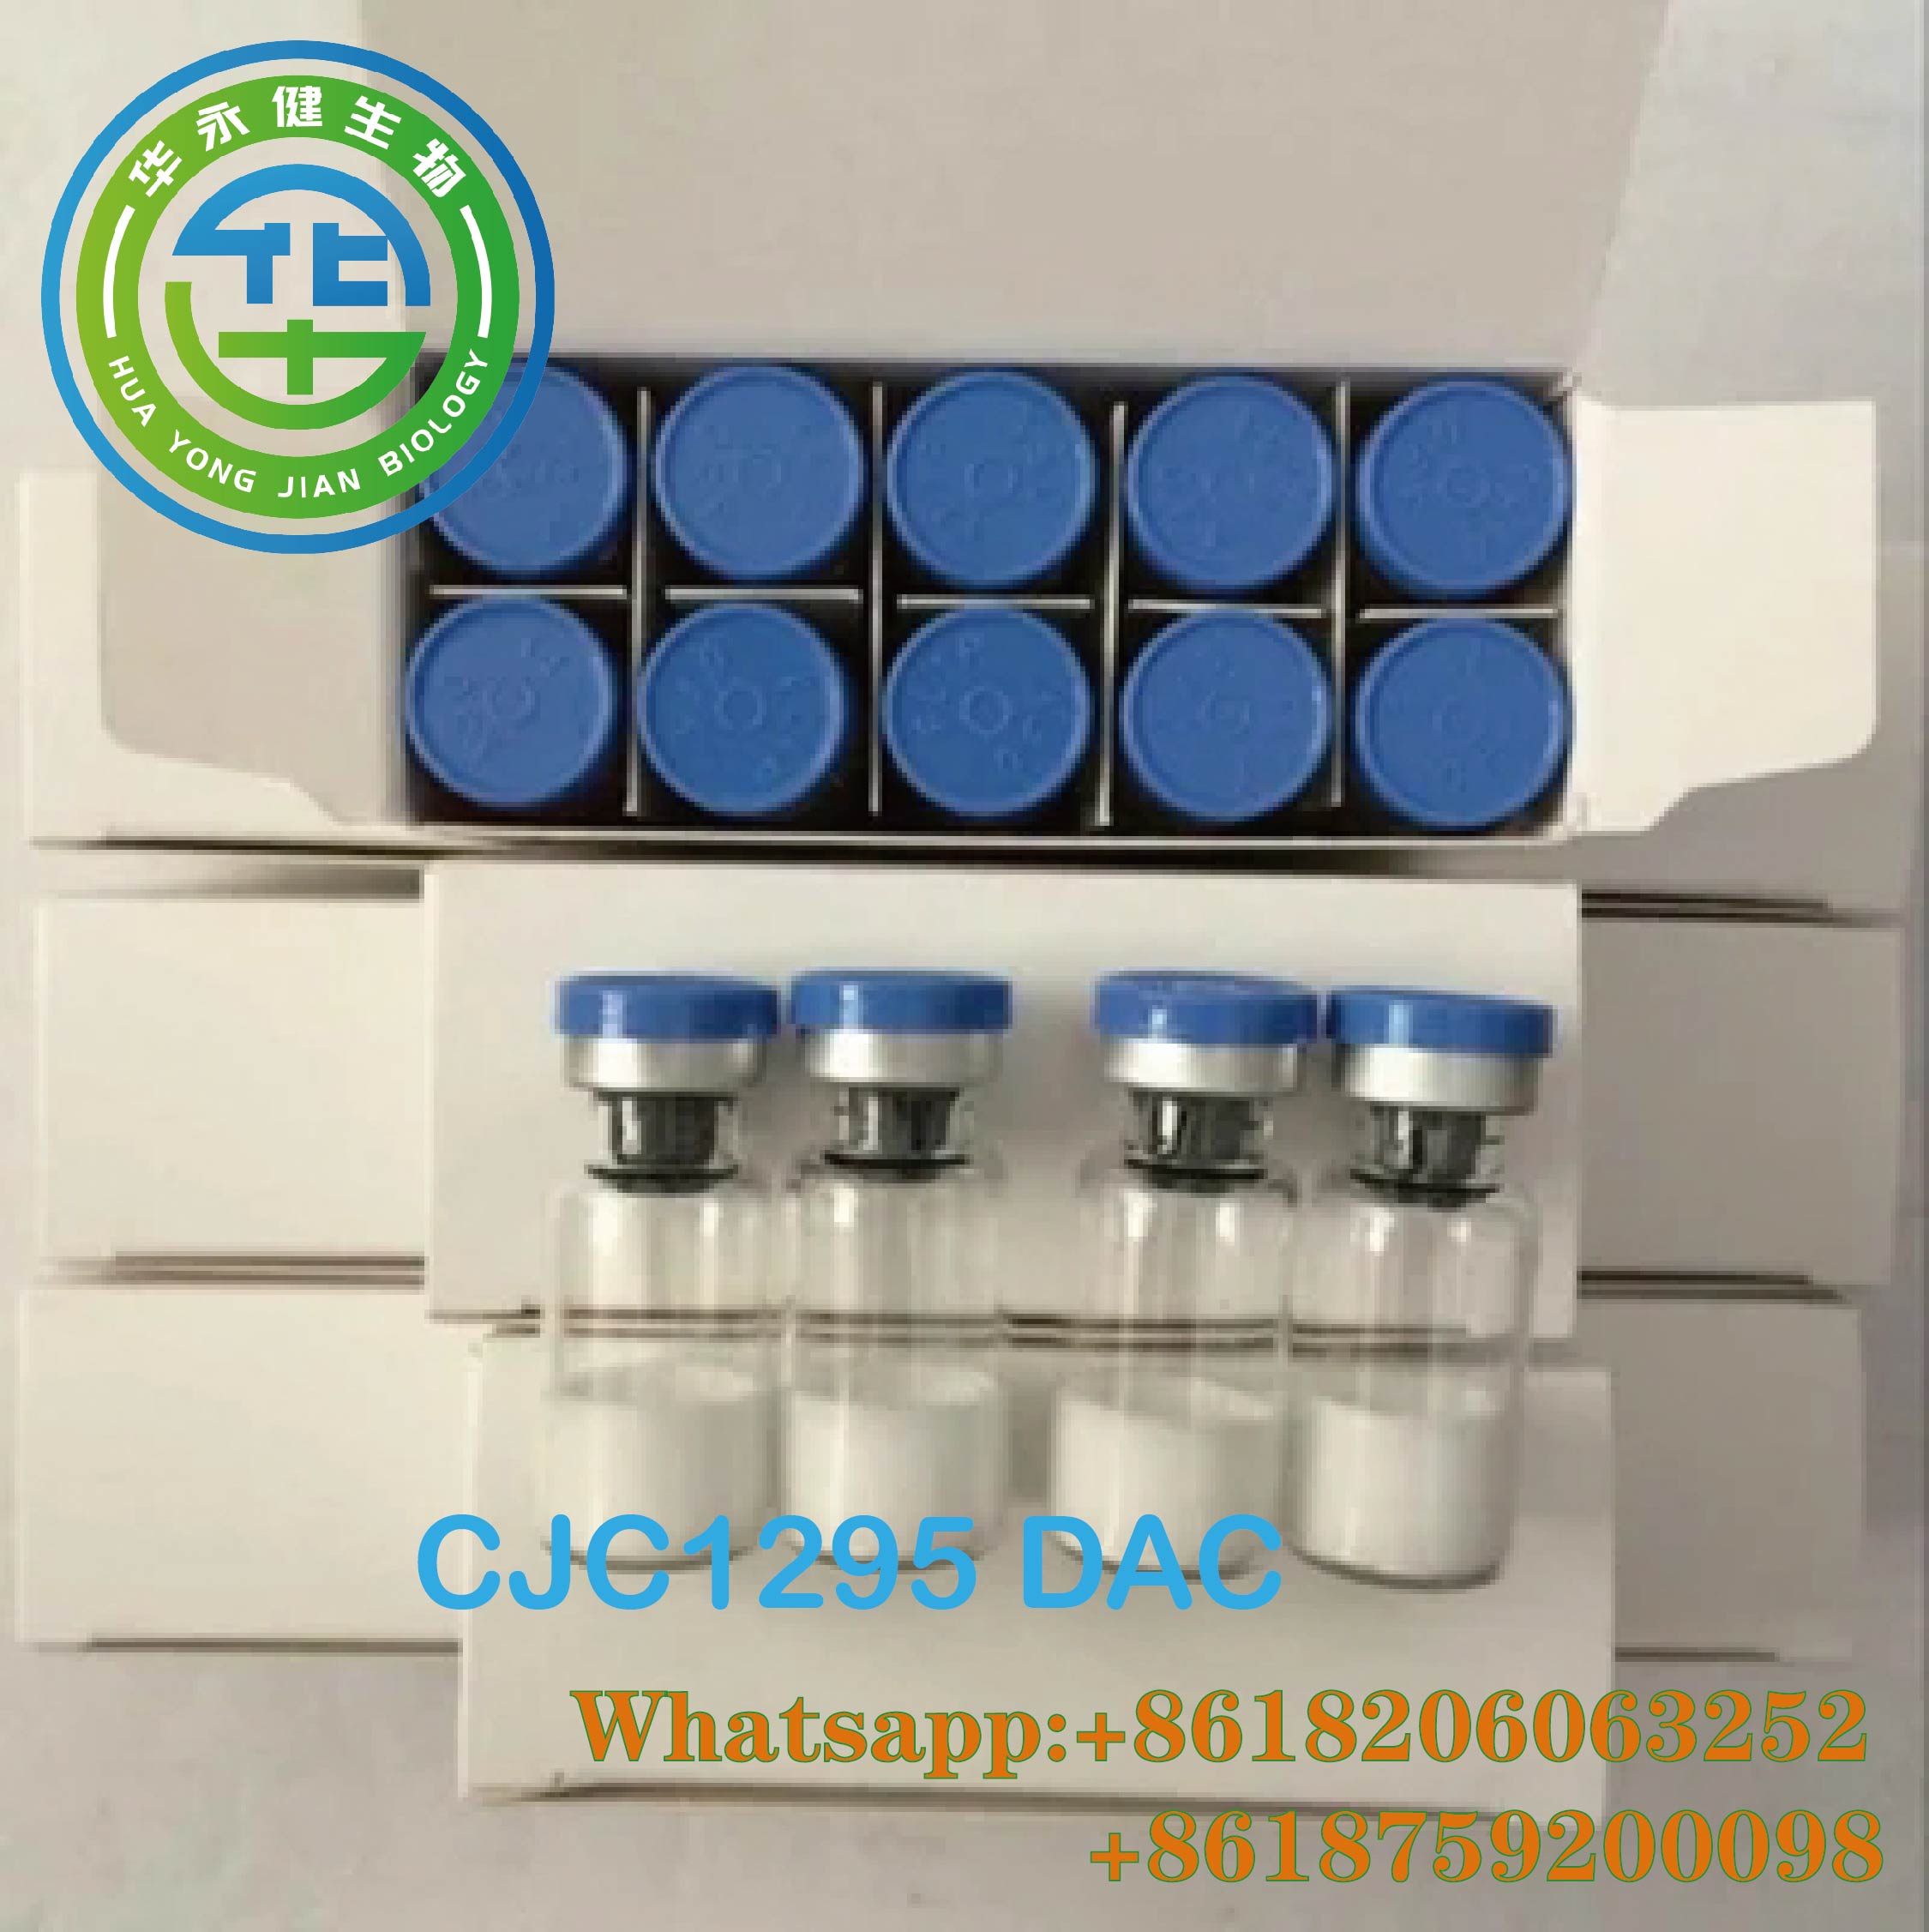 CJC1295 DAC Human Hormone Peptide With High Effec For Bodybuilding 